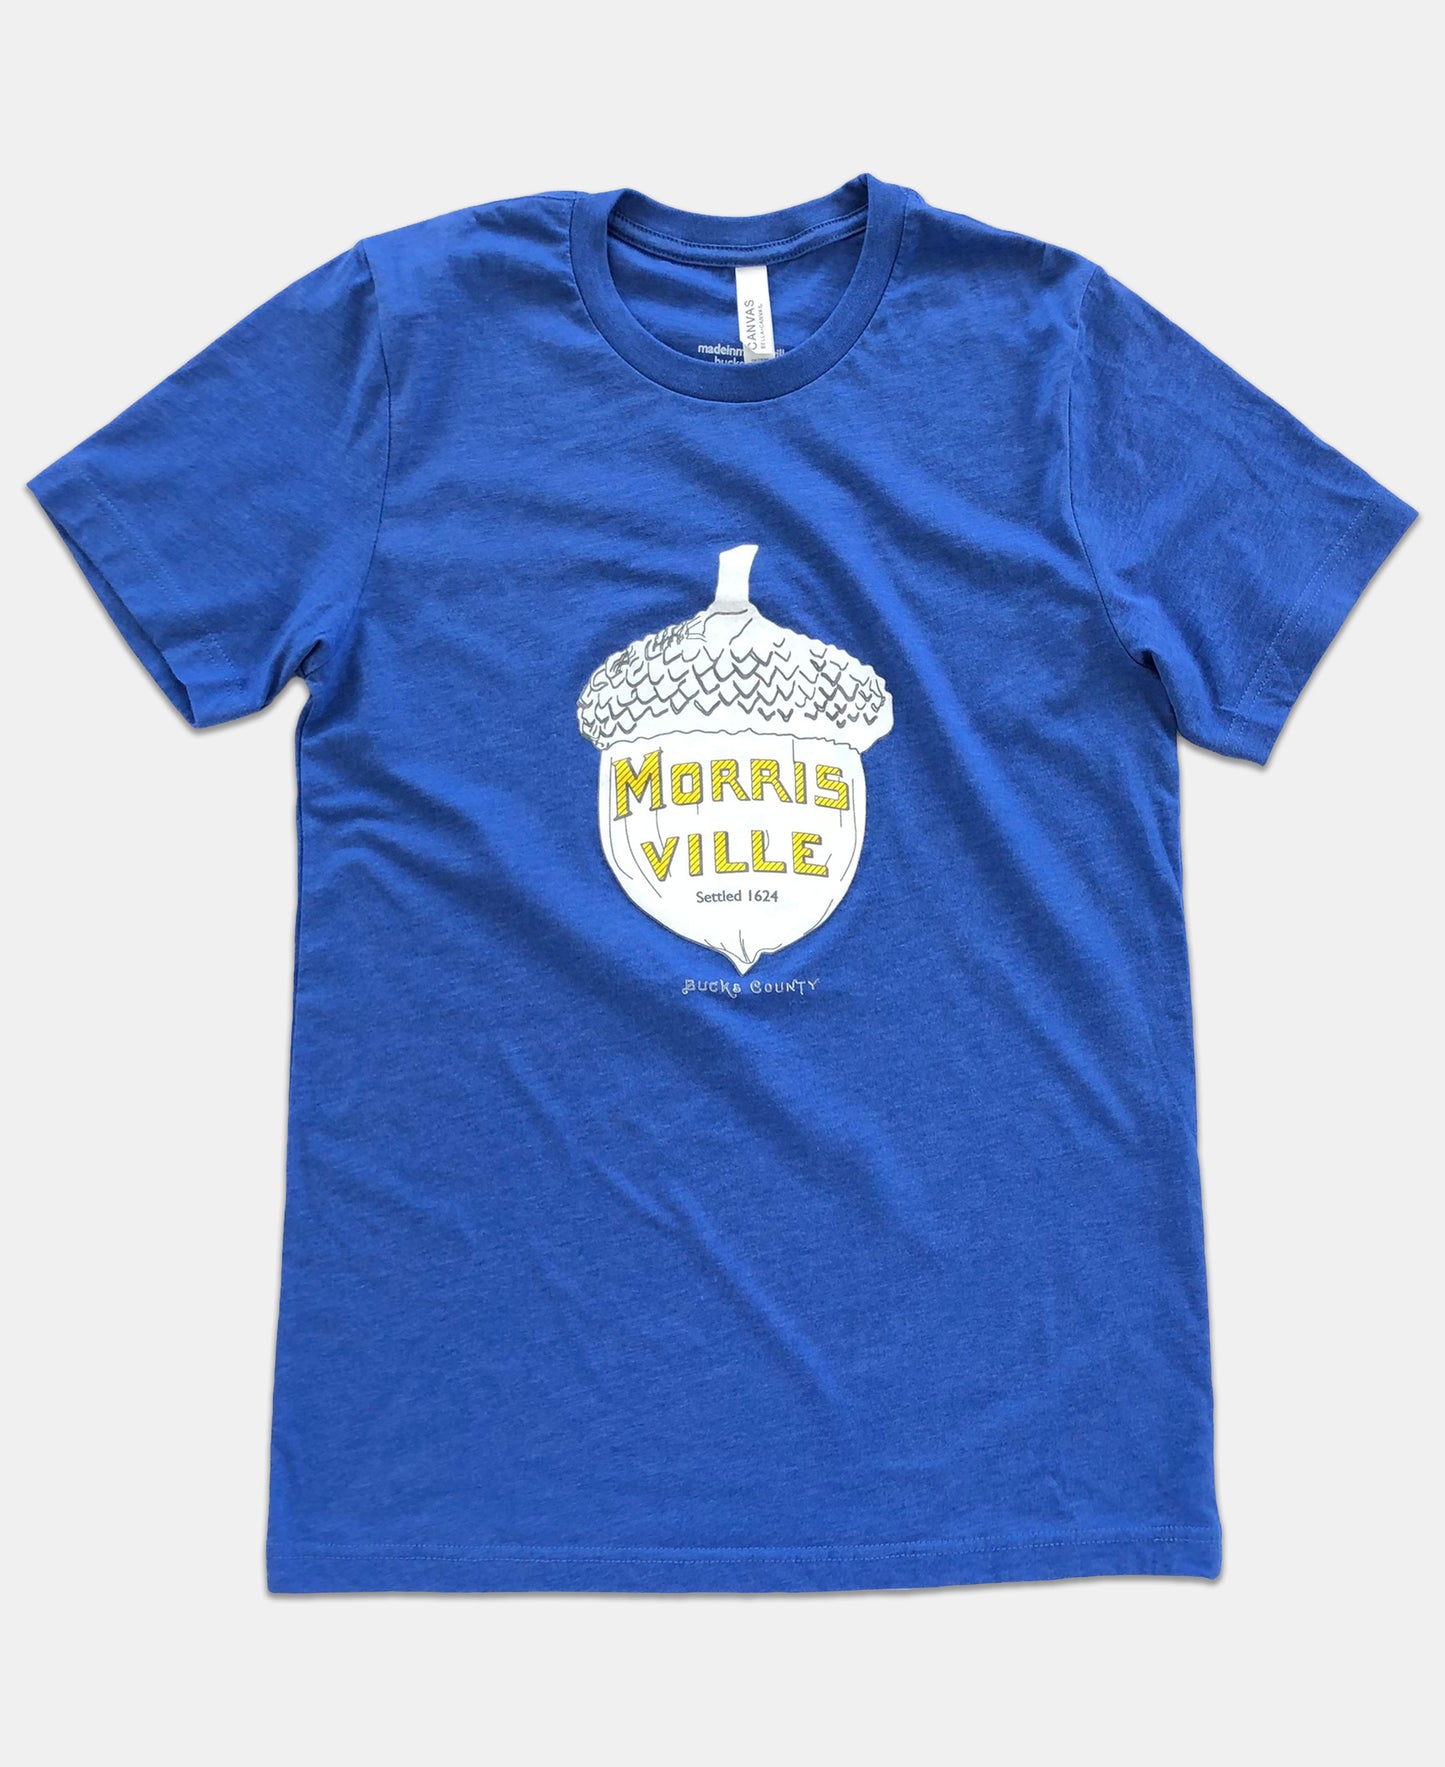 Acorn/Morrisville graphic T-shirt - heather royal blue